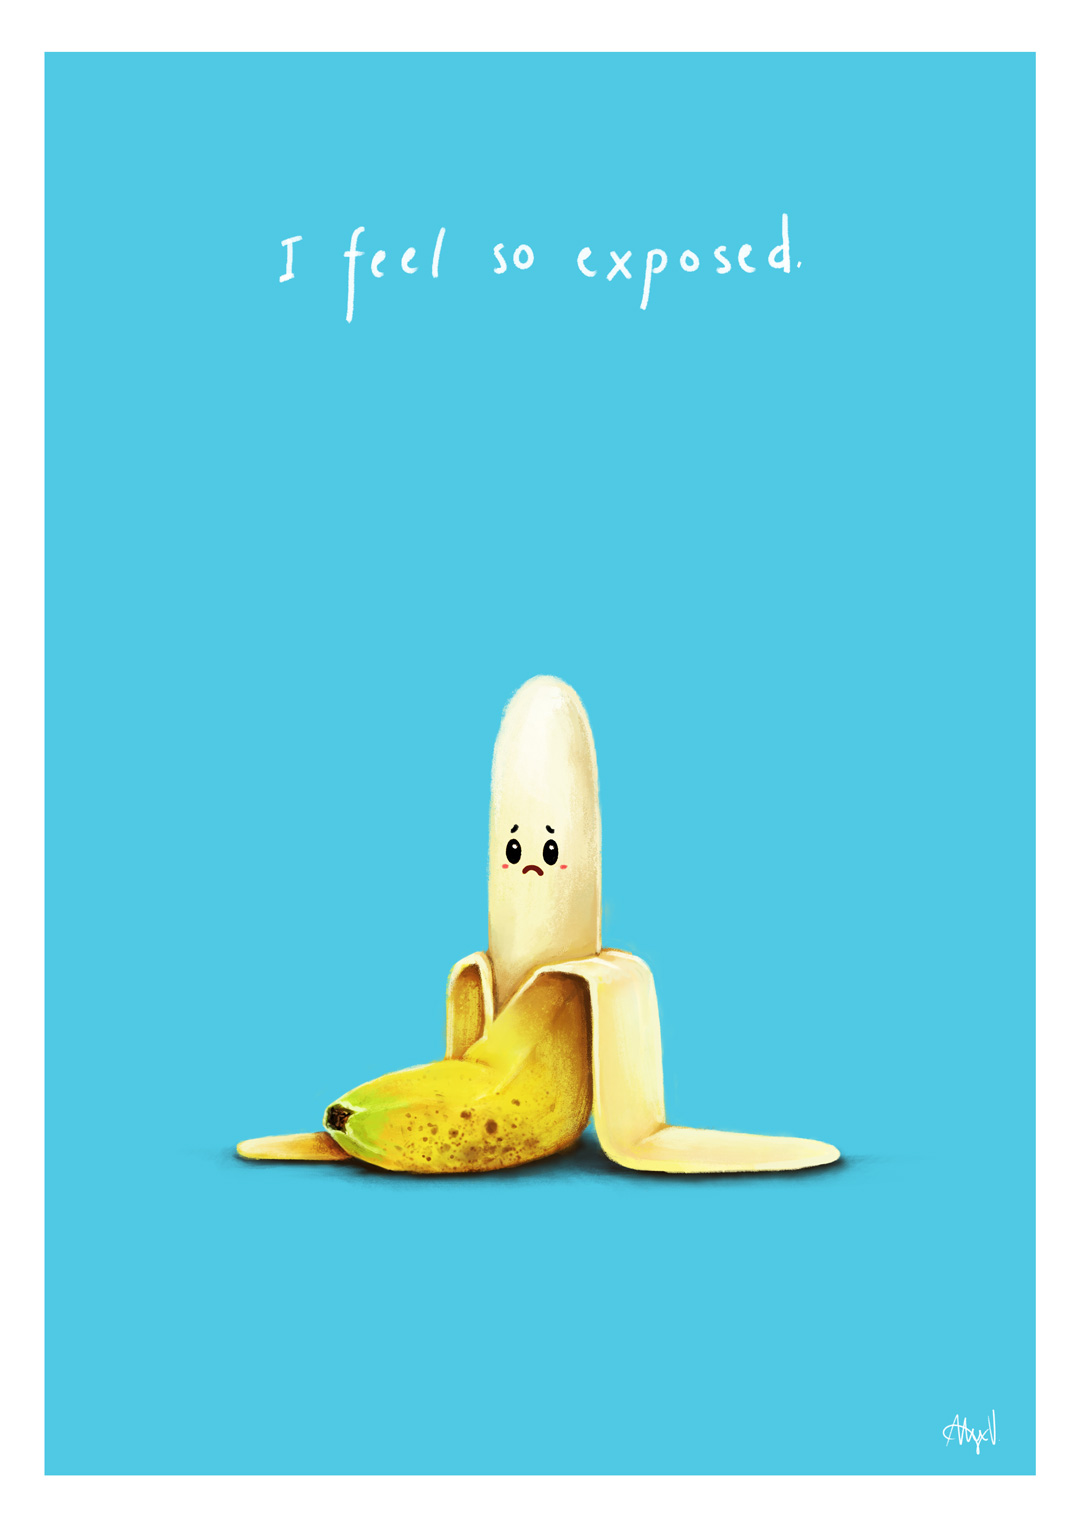 Depressed banana poster